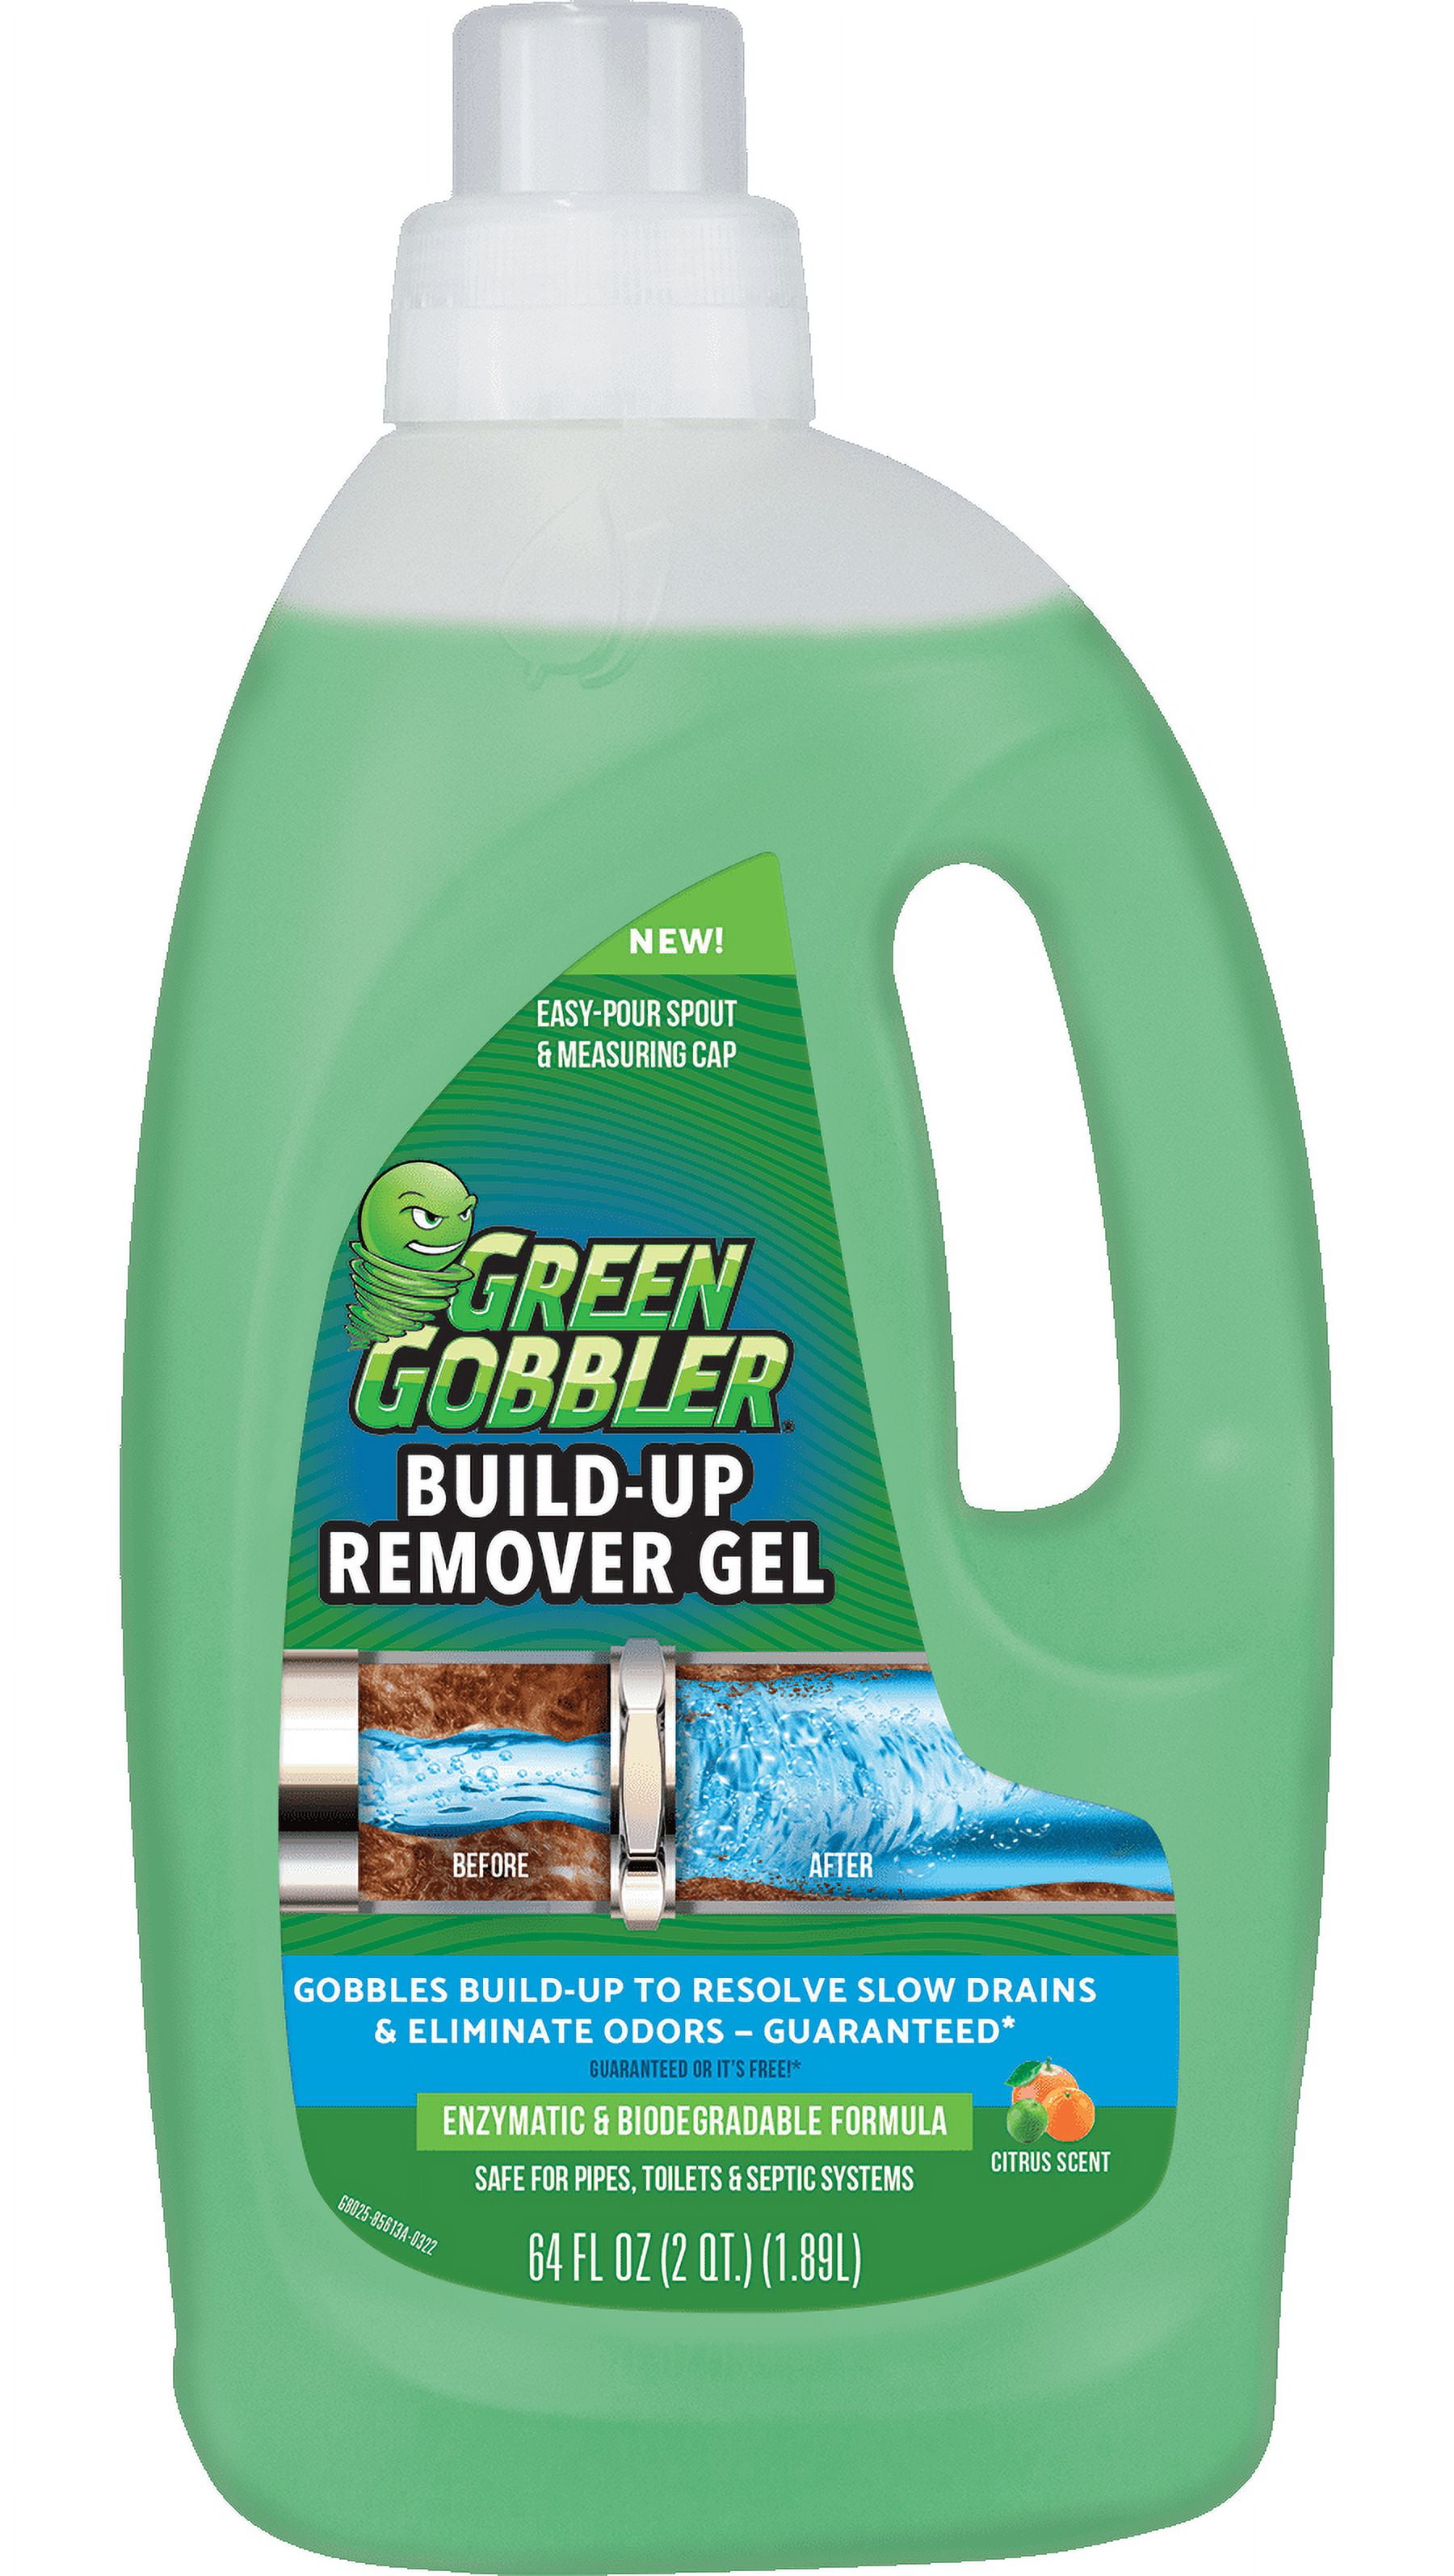 Green Gobbler 16.5 oz. Powder Plunger Toilet Clog Remover (2 Pack